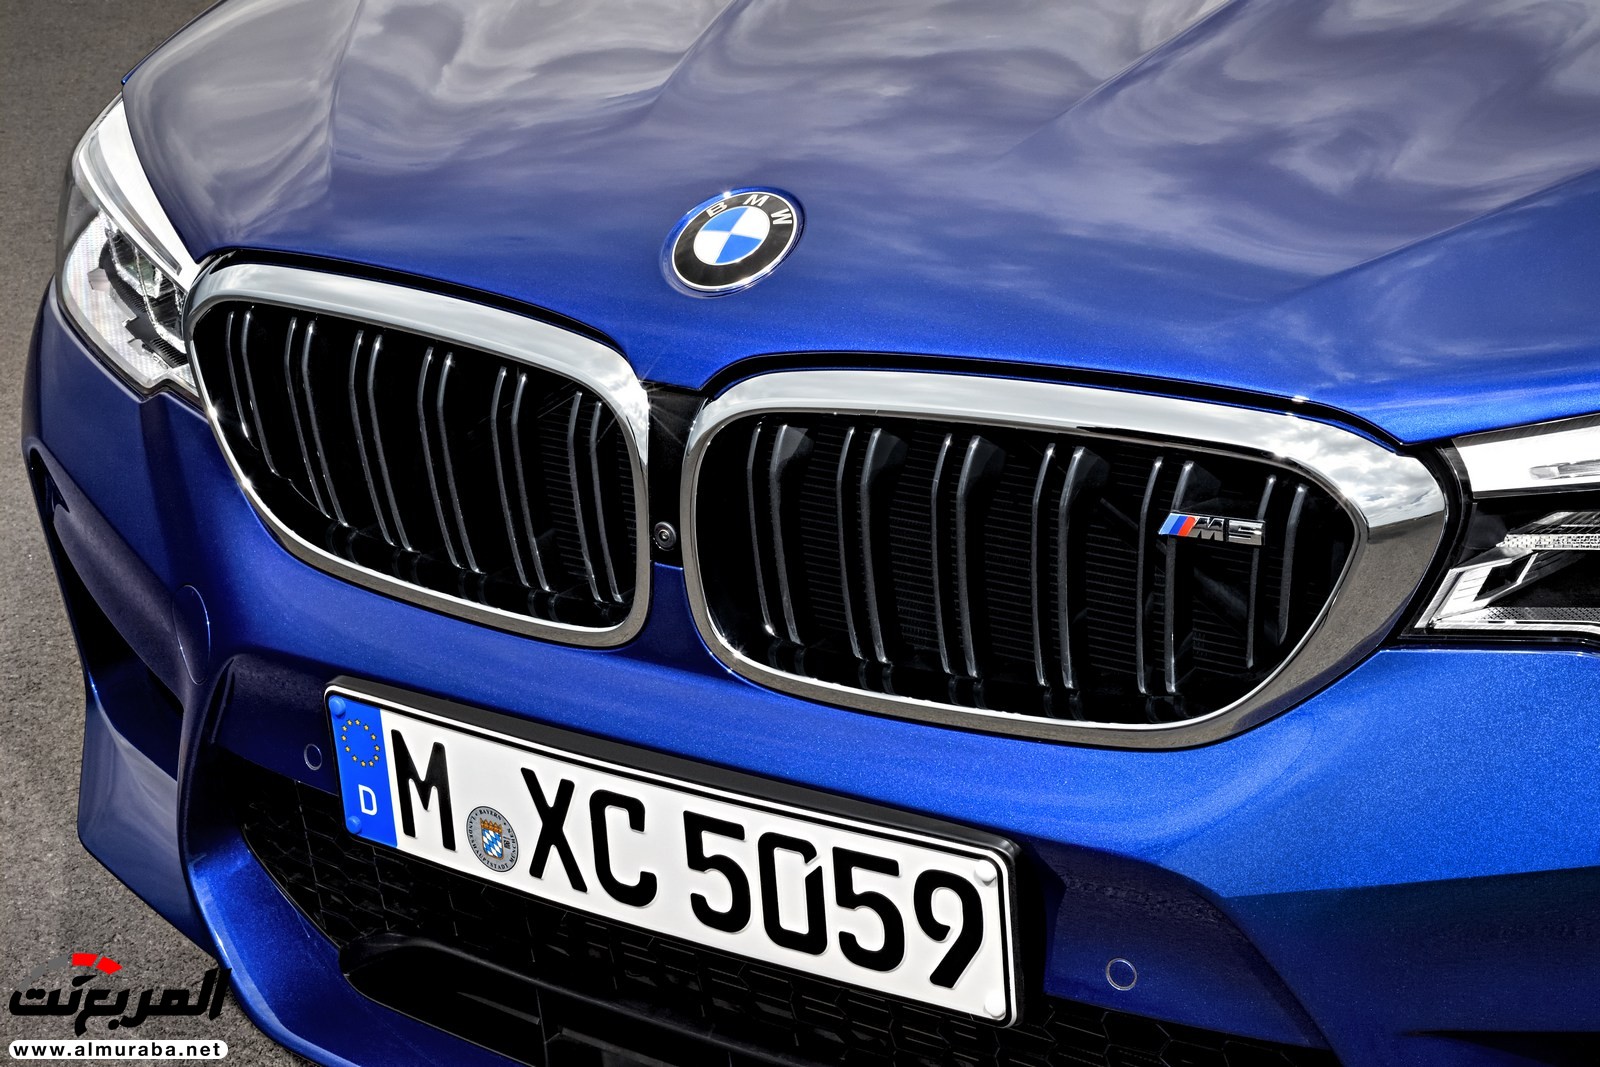 بي ام دبليو M5 2018 تكشف نفسها رسمياً بقوة ٦٠٠ حصان "صور ومواصفات" BMW 25